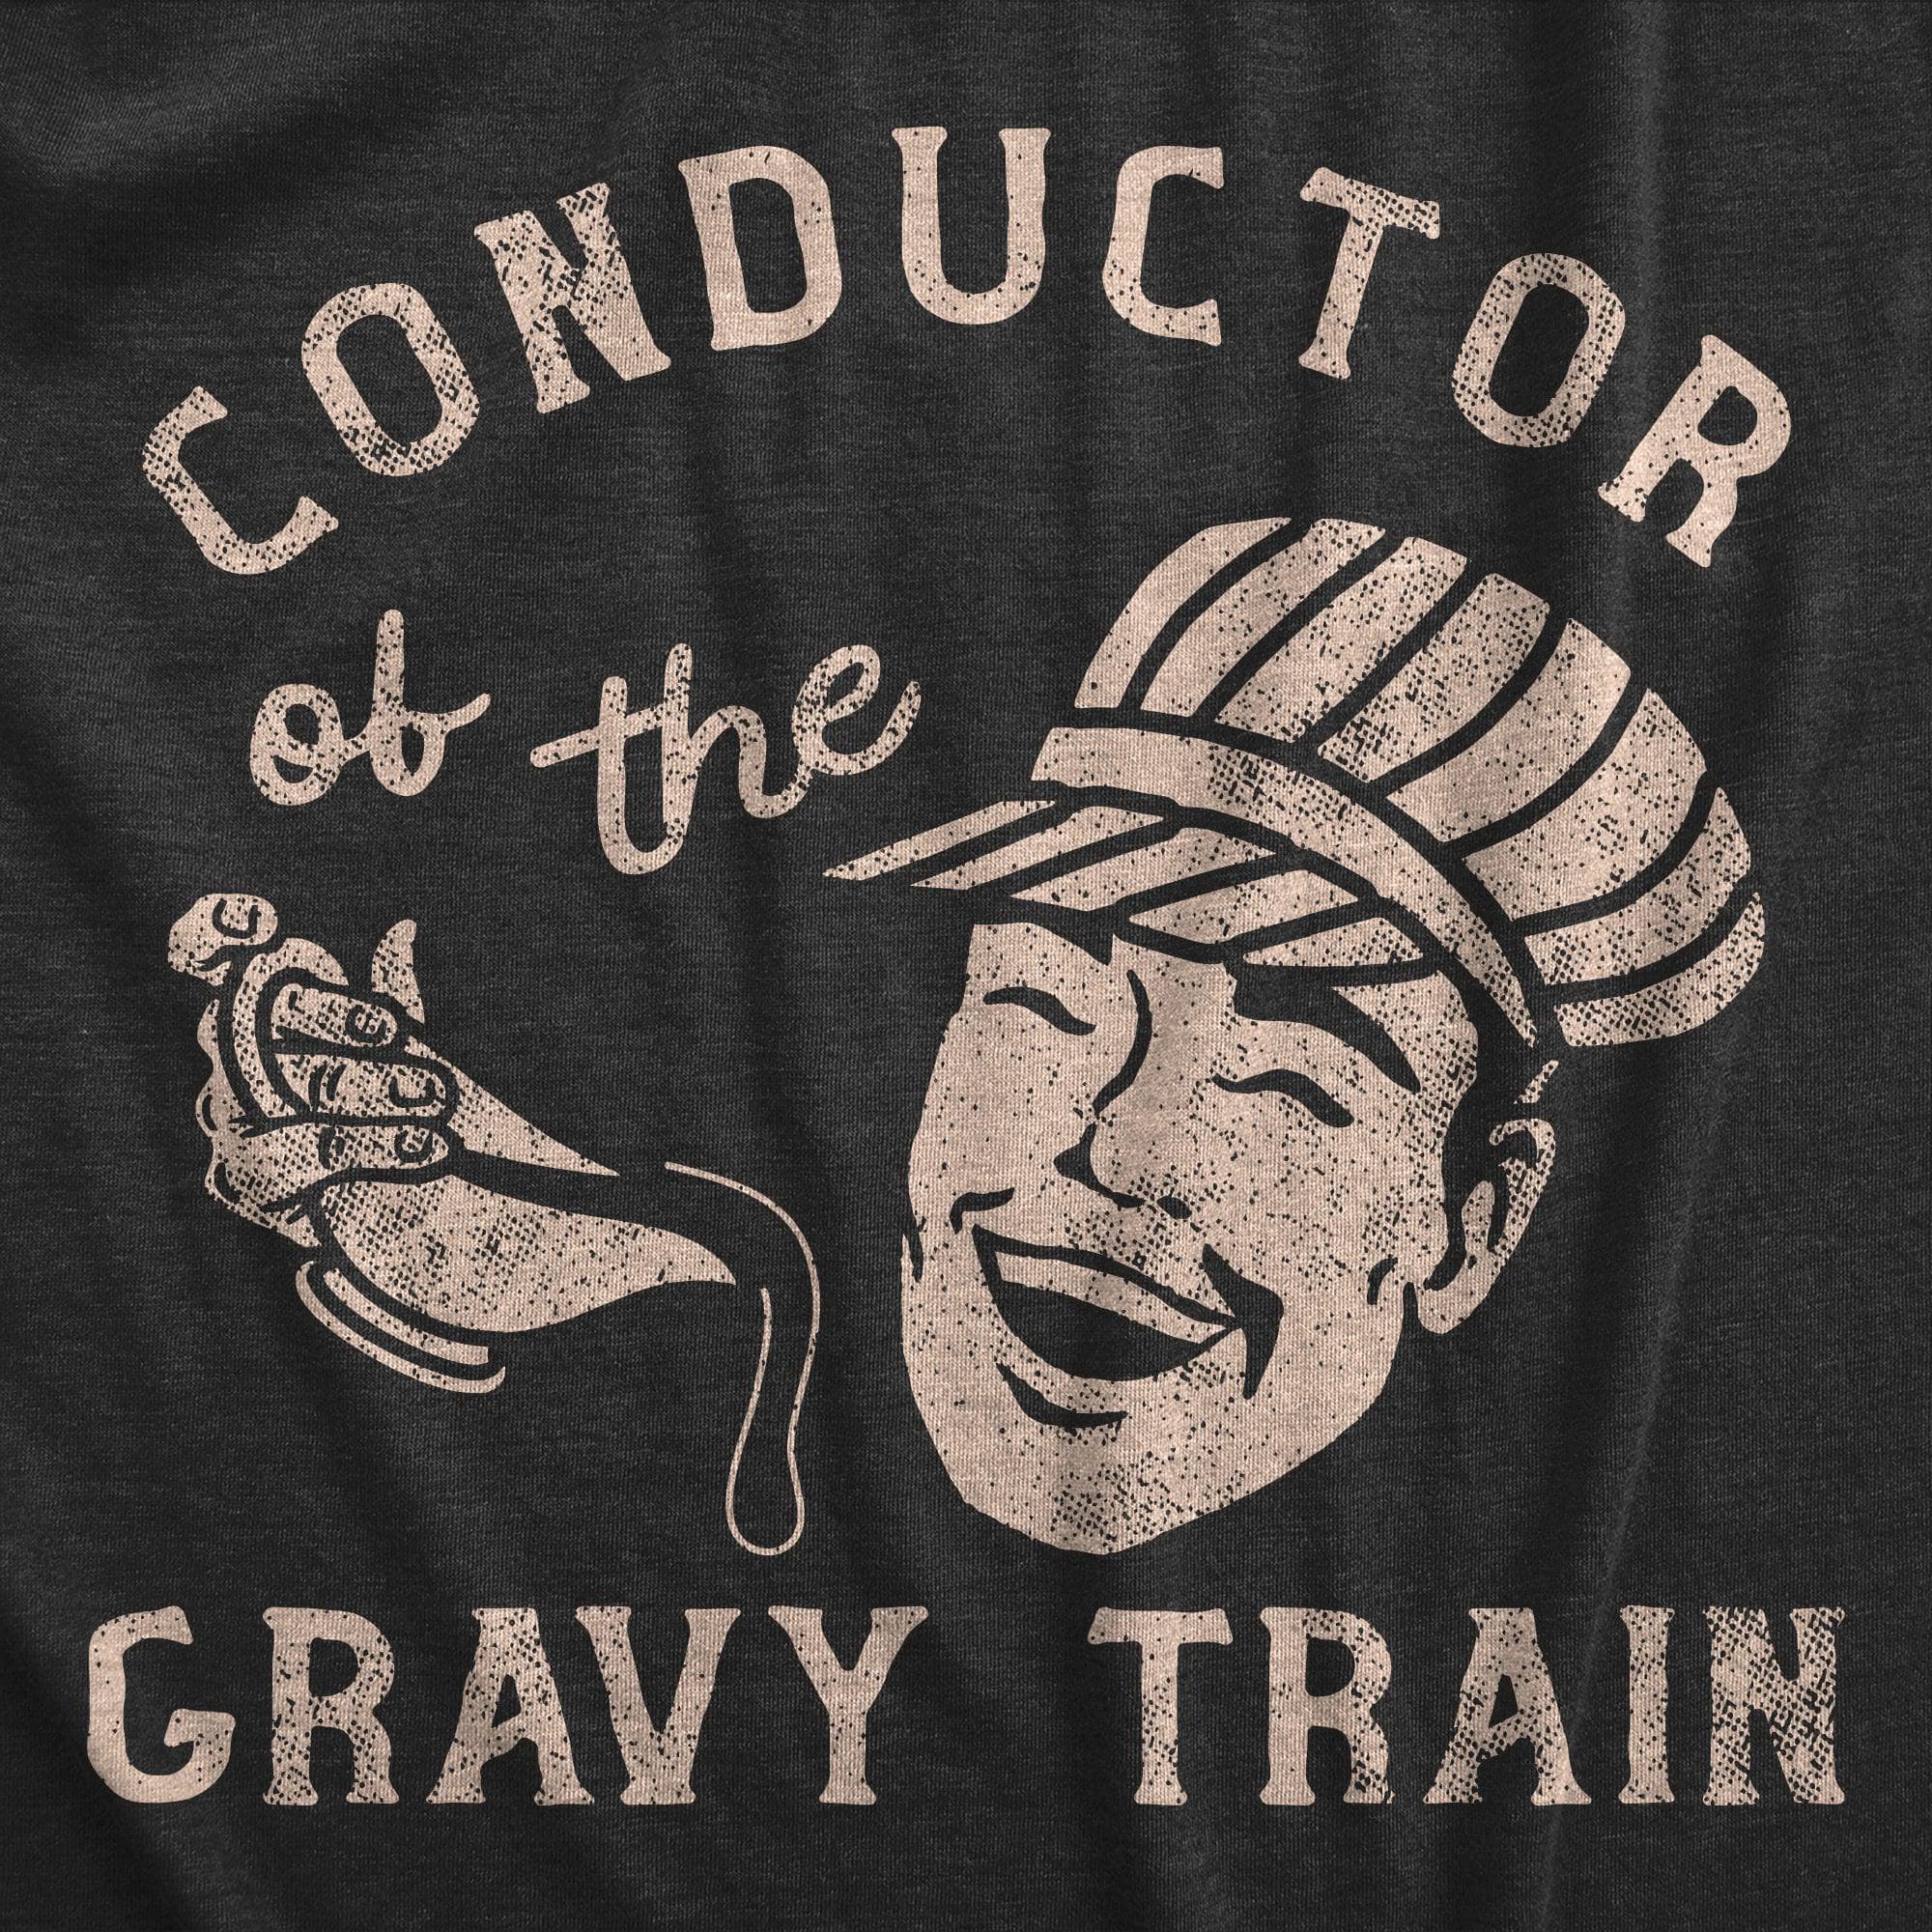 Conductor Of The Gravy Train Men's Tshirt  -  Crazy Dog T-Shirts